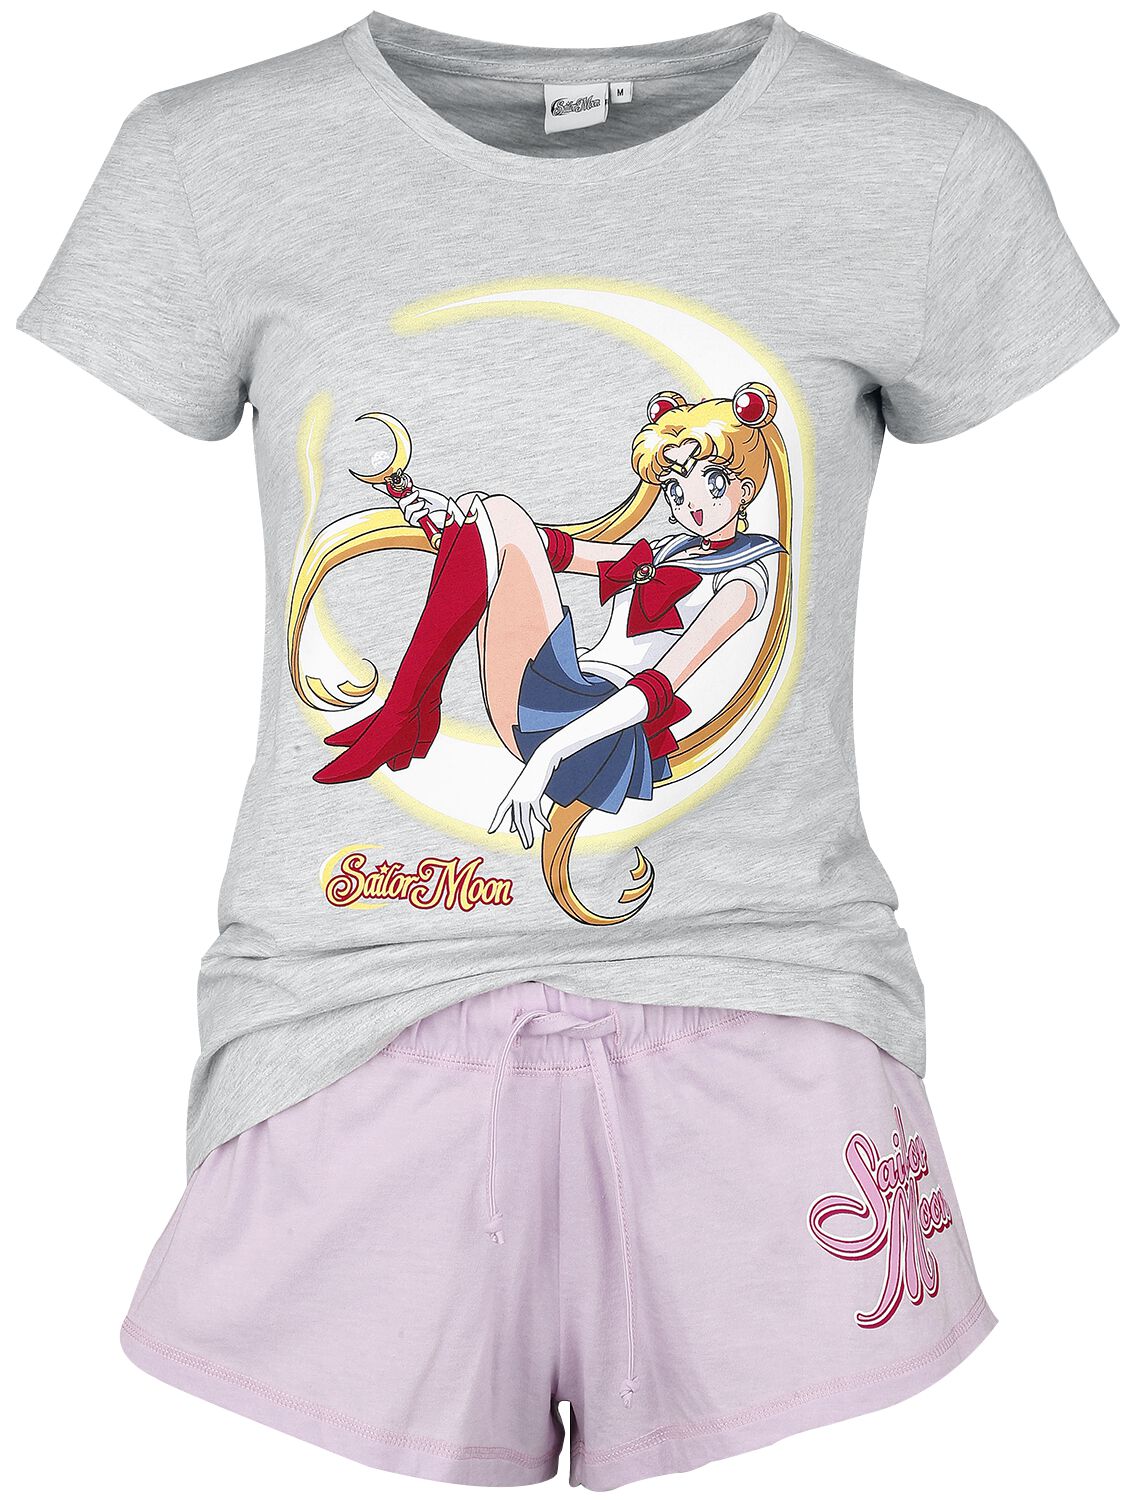 sailor moon - anime schlafanzug - s bis xxl - fÃ¼r damen - grÃ¶ÃŸe xl - - emp exklusives merchandise! multicolor donna